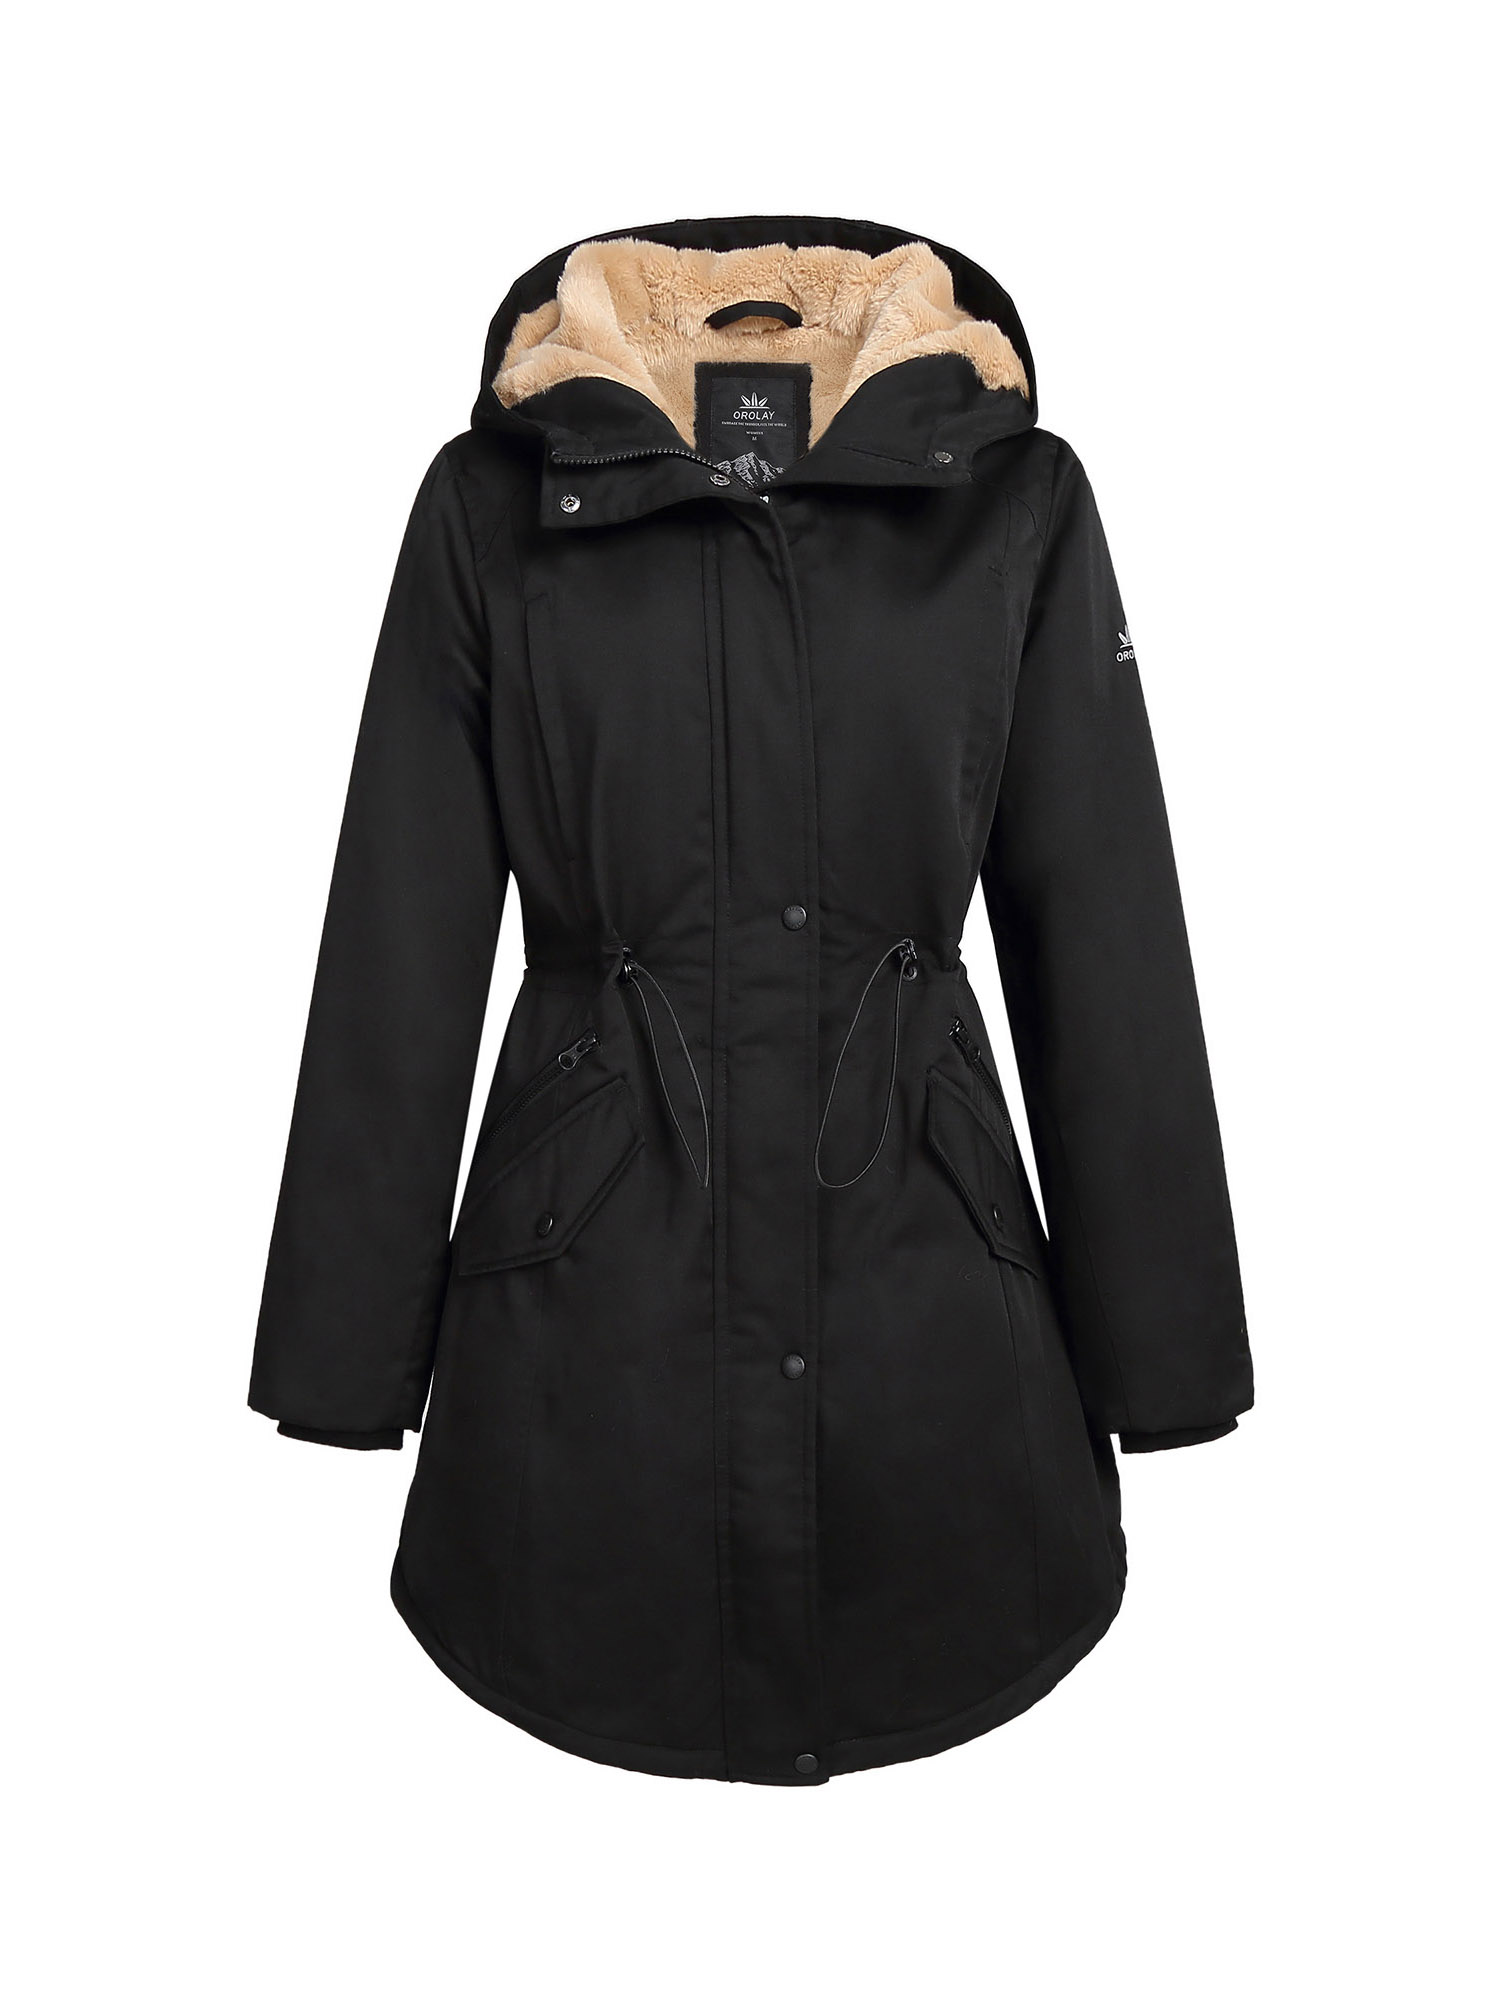 Orolay Women's Winter Parka Fleece Parka Warm Winter Coat Hoodie Jacket Mid length Winter Jacket Black XL - image 1 of 5